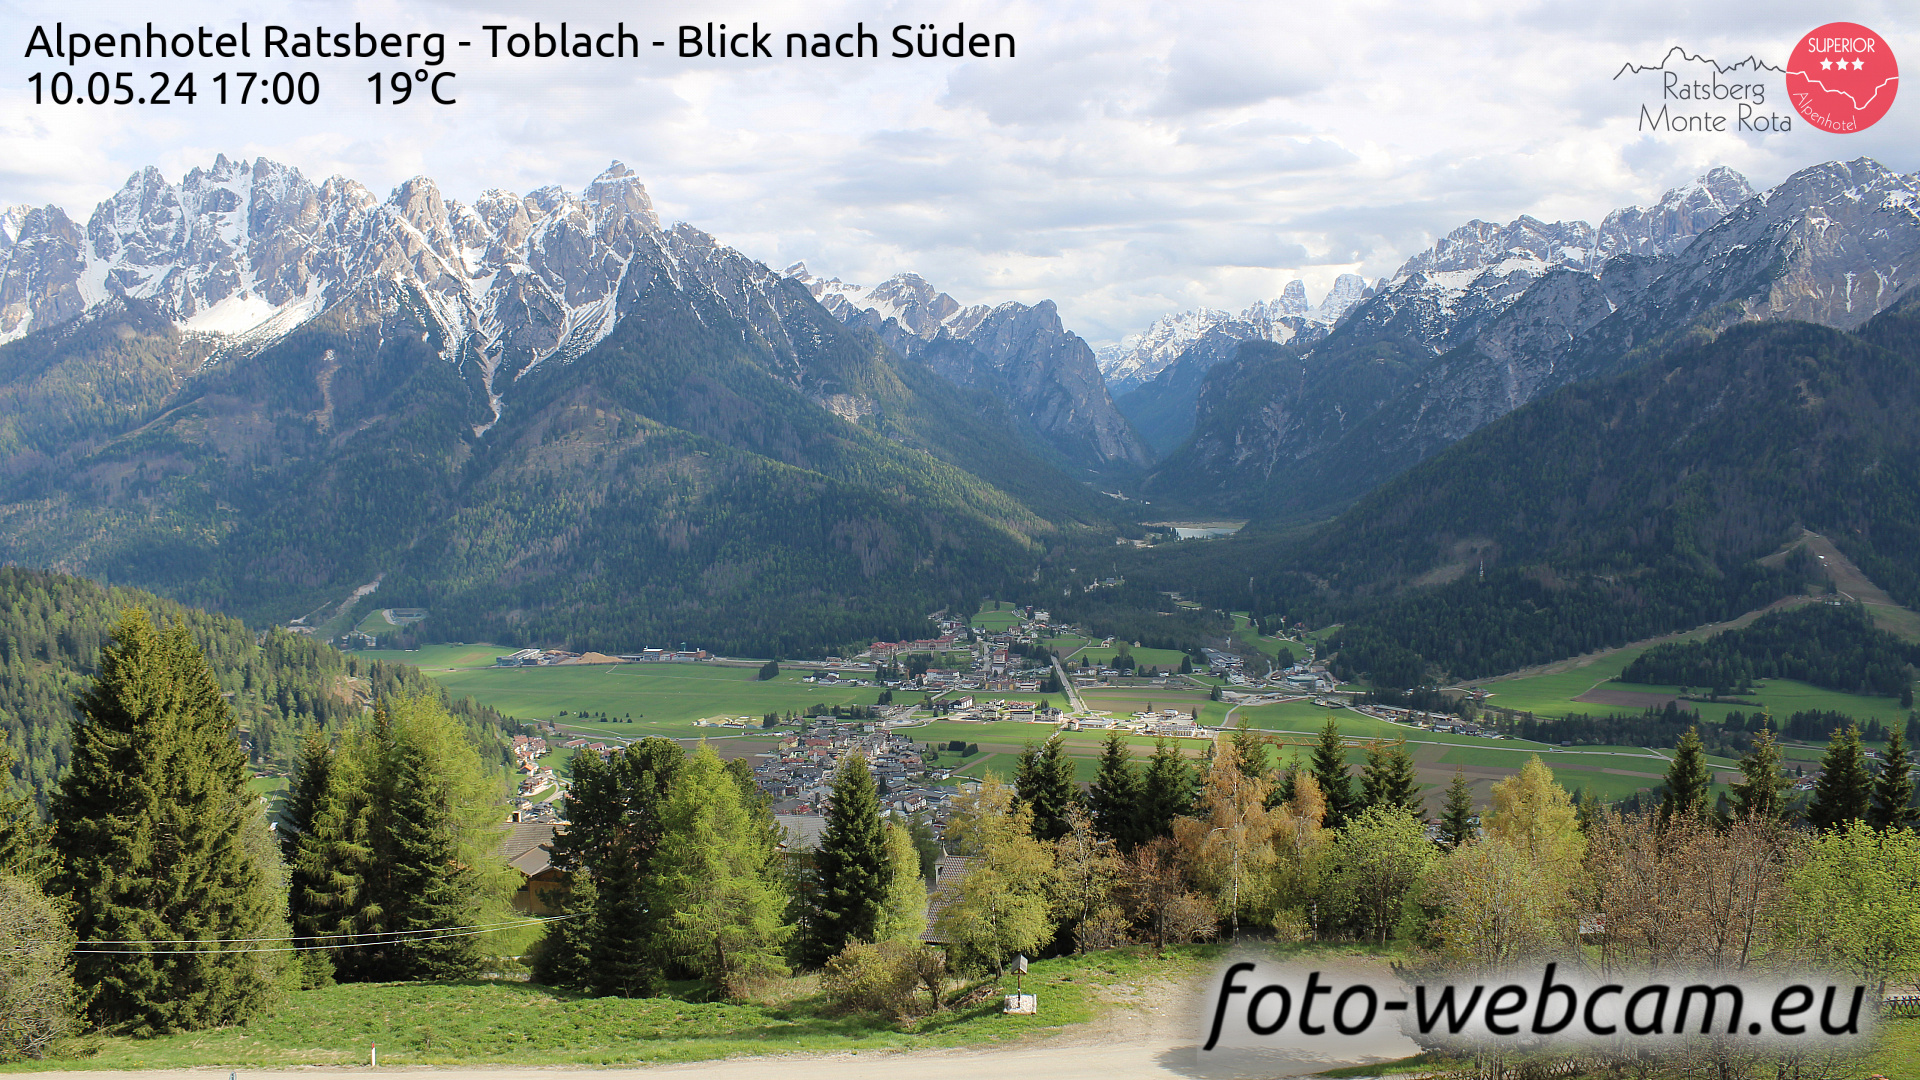 Toblach (Dolomites) Thu. 17:03